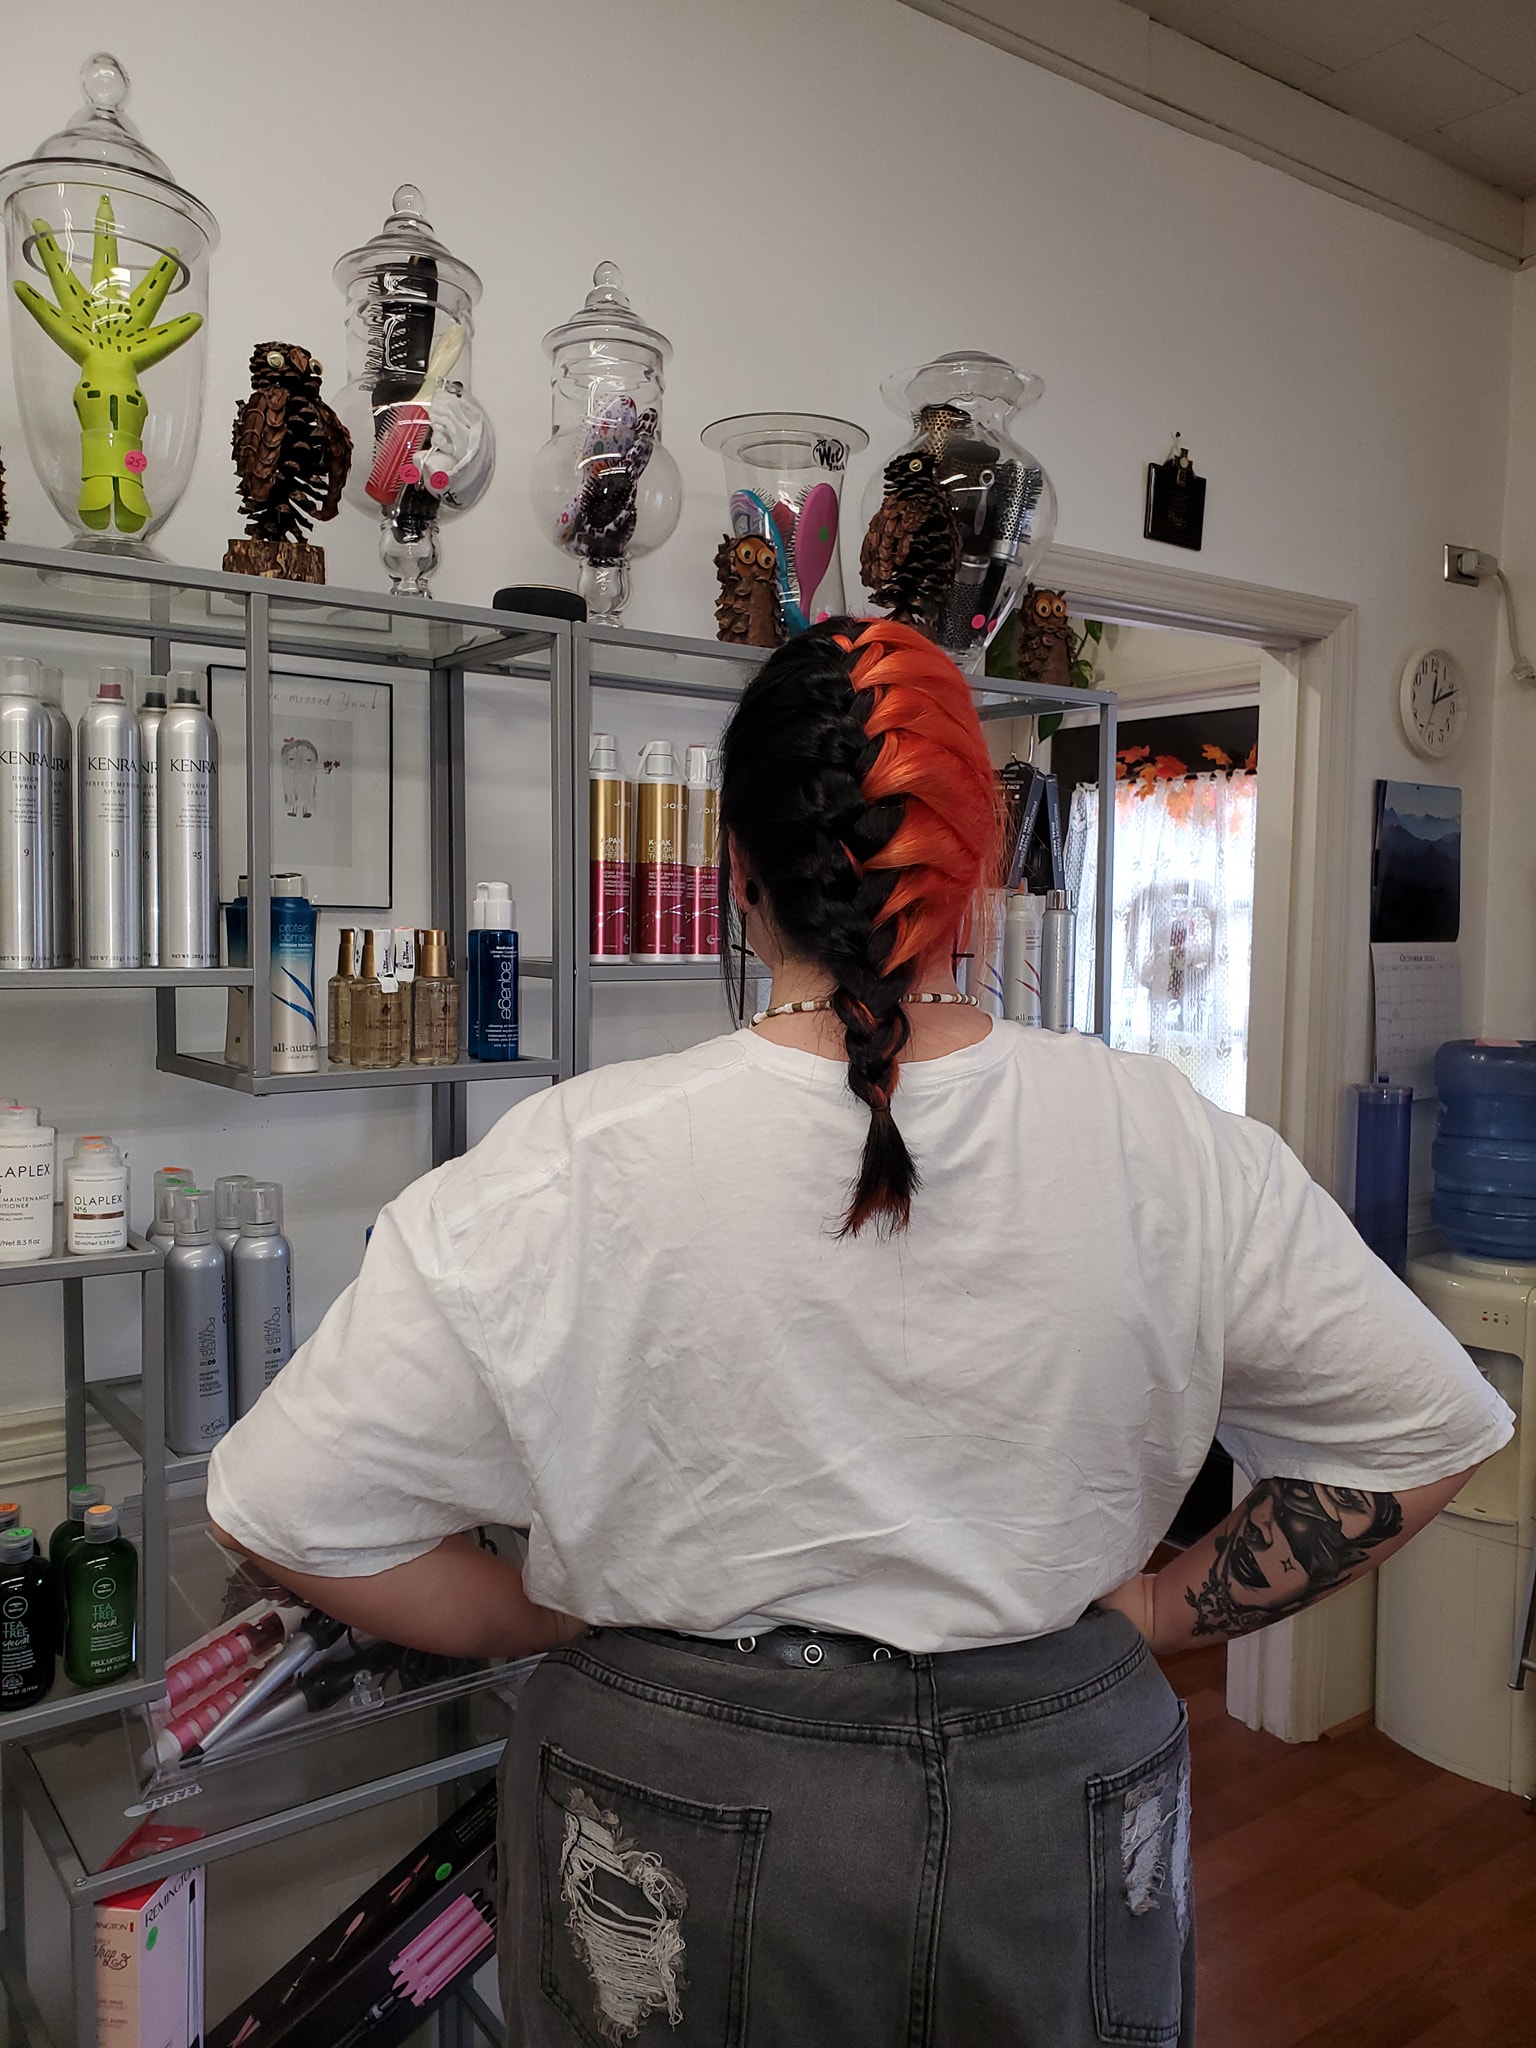 Myriam Haircolorist Salon LLC 119 E Main St, Pilot Mountain North Carolina 27041